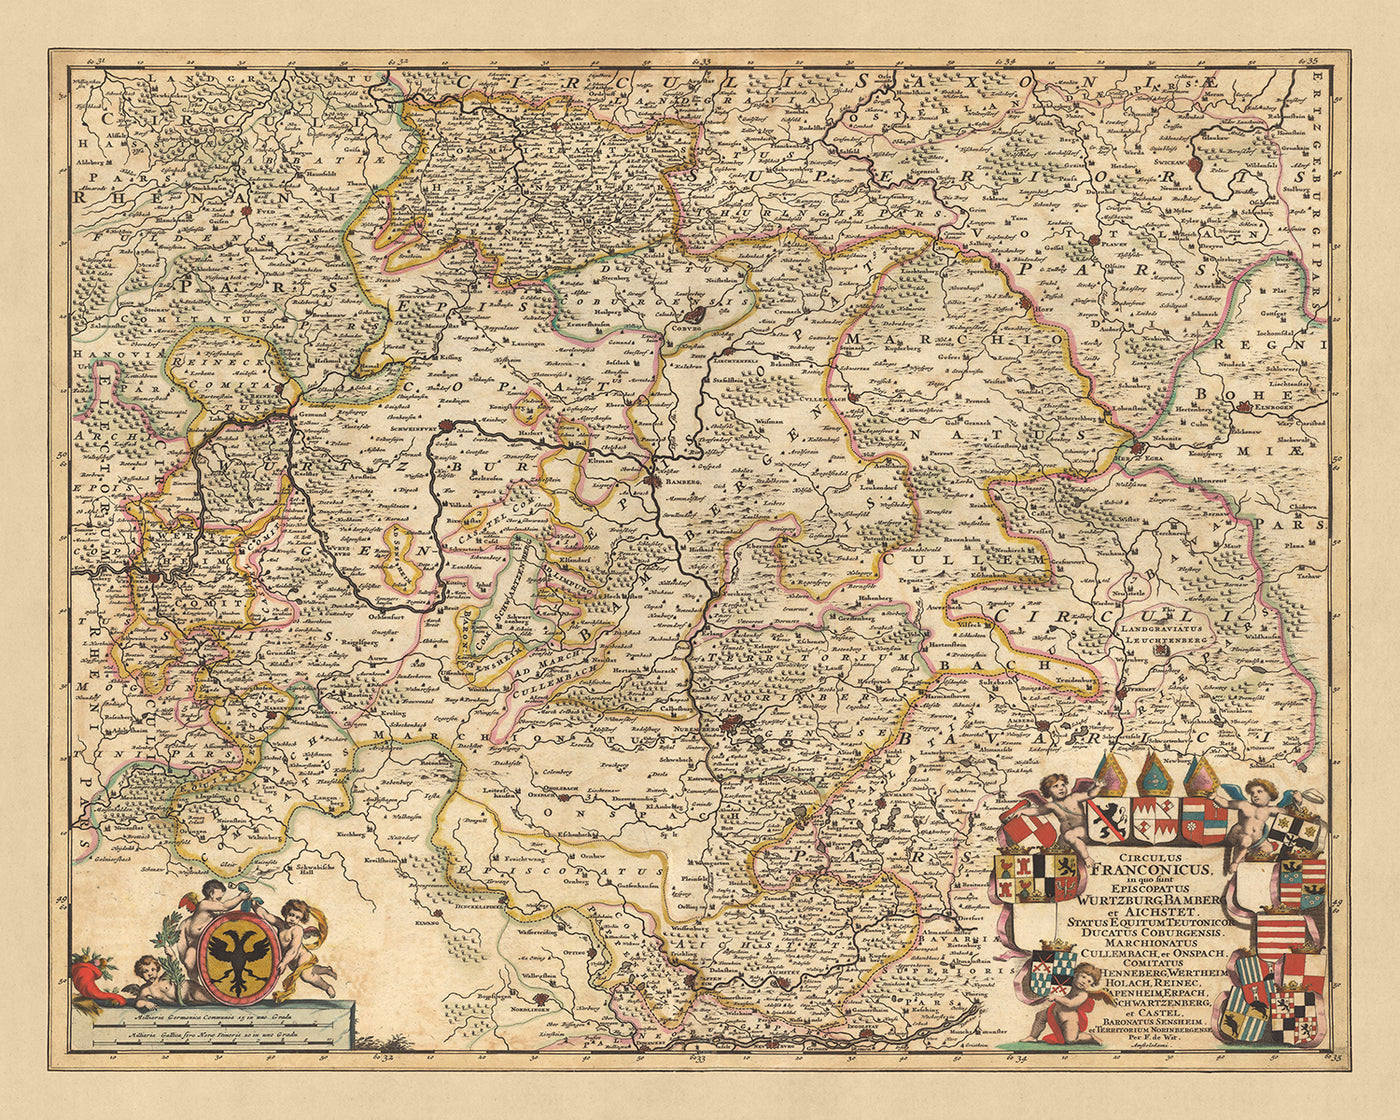 Old Map of Franconian Circle by Nicolaes Visscher II, 1690: Nuremberg, Ingolstadt, Würzburg, Zwickaw, Slavkov Forest